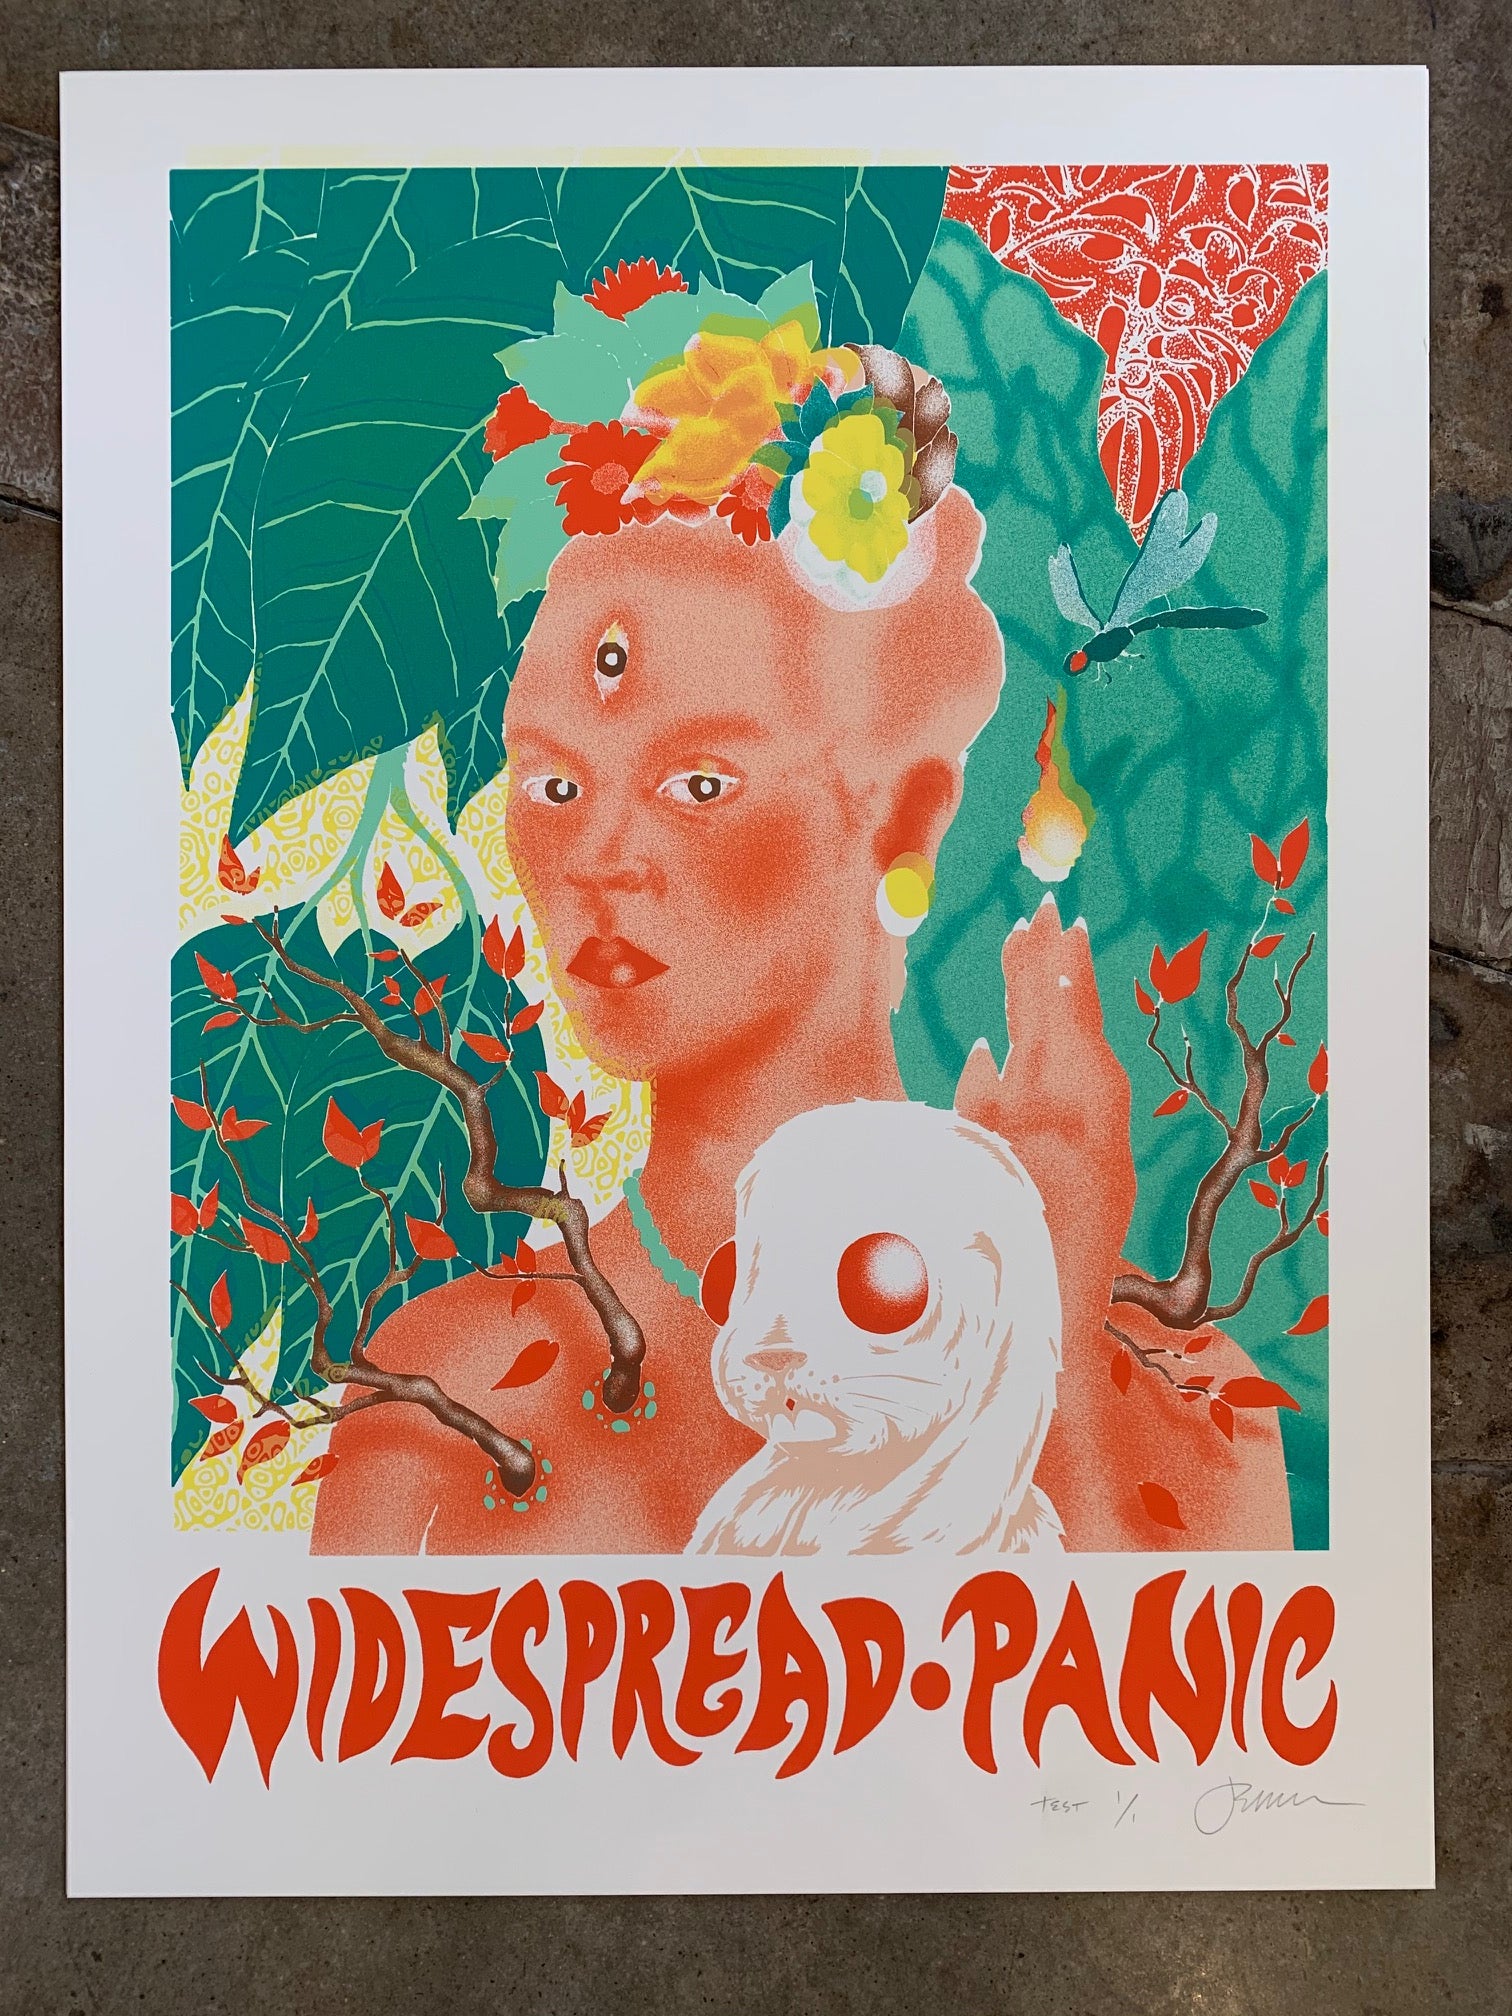 Widespread Panic - Austin, TX - 10.15.14 (Cosmic Daughter 